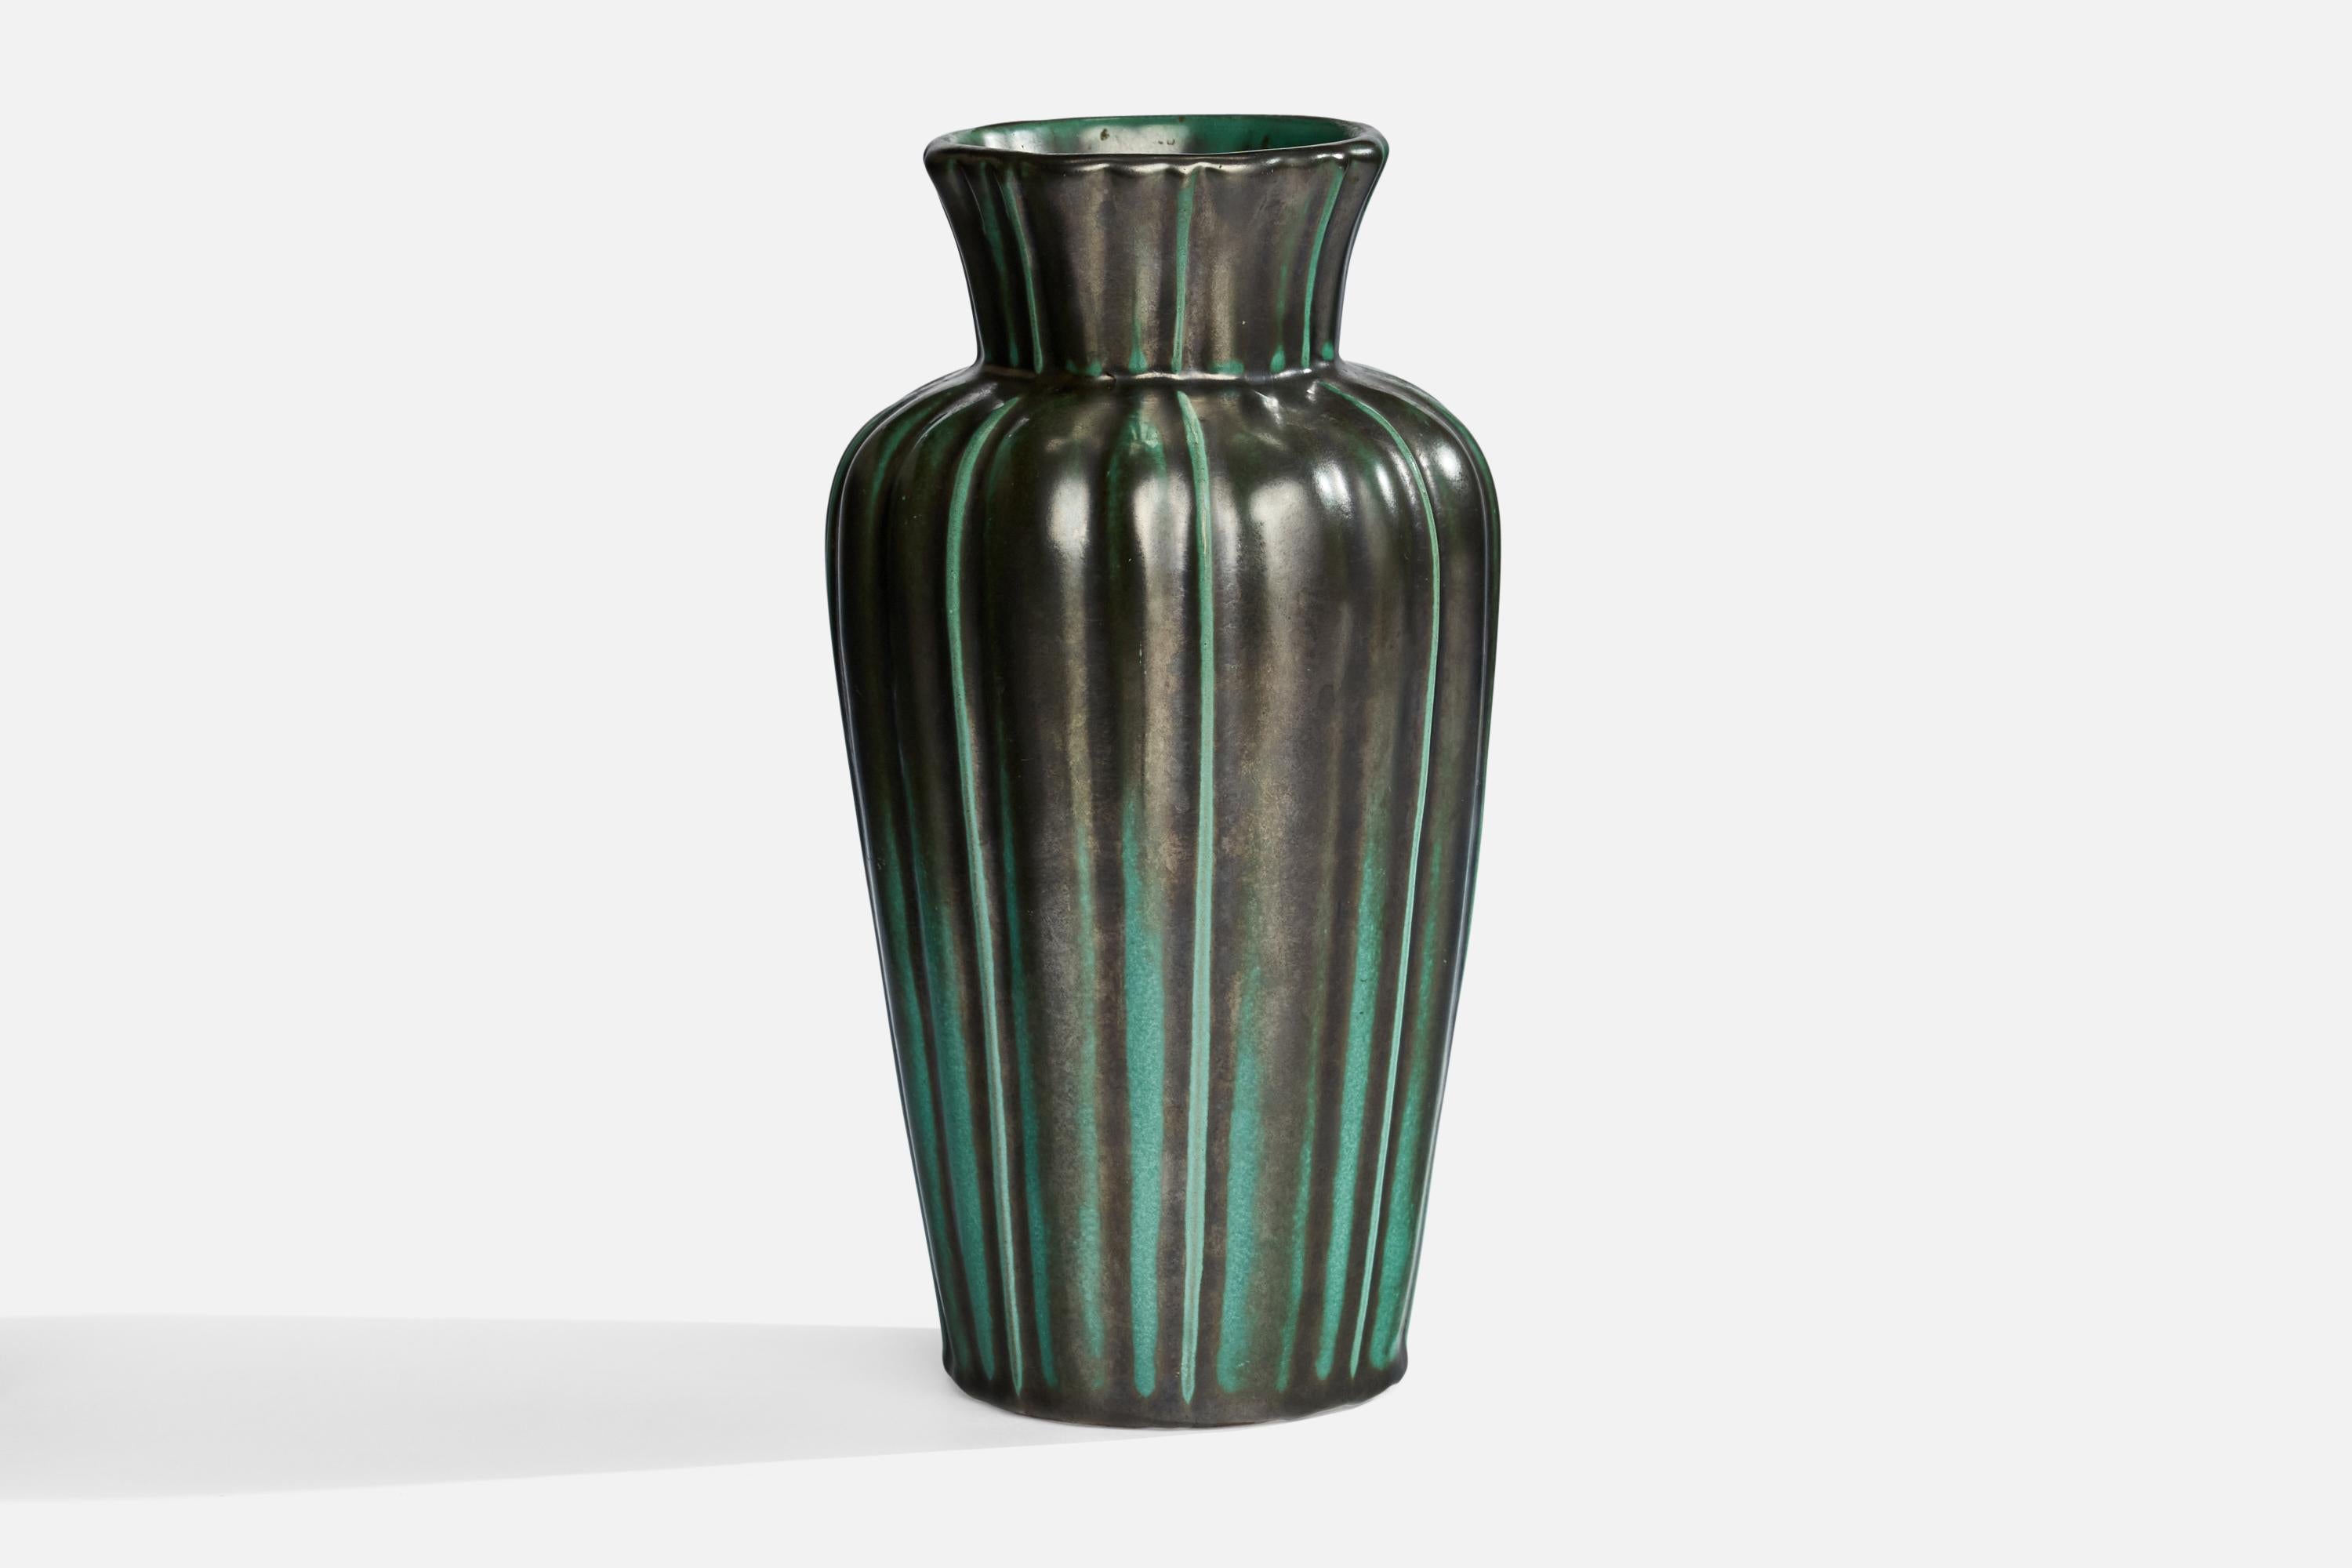 A green-glazed fluted earthenware vase designed and produced by Upsala Ekeby, Sweden, 1930s.